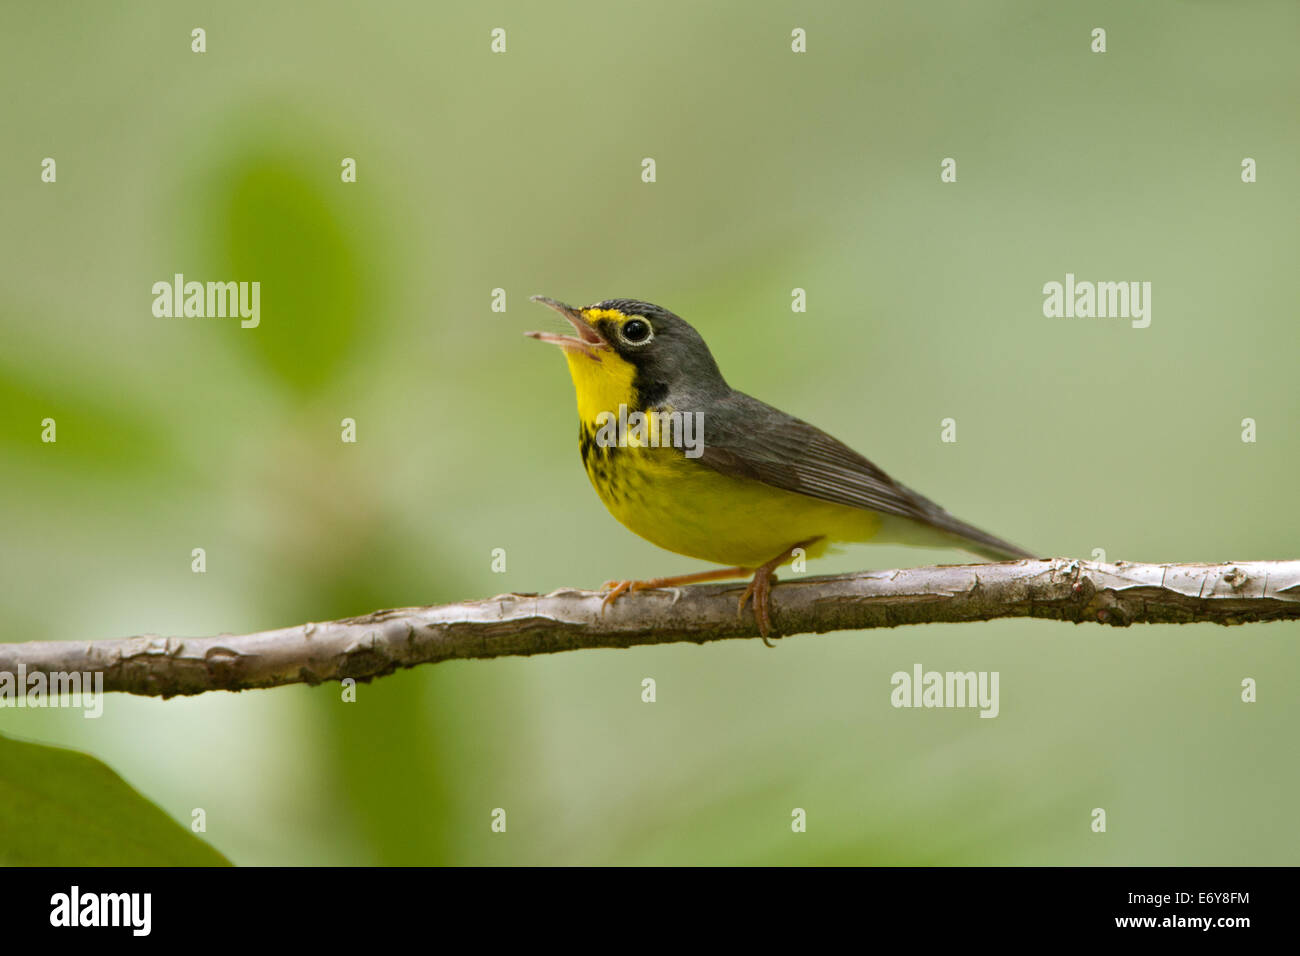 Canada Warbler bird songbird singing Ornithology Science Nature Wildlife Environment Stock Photo